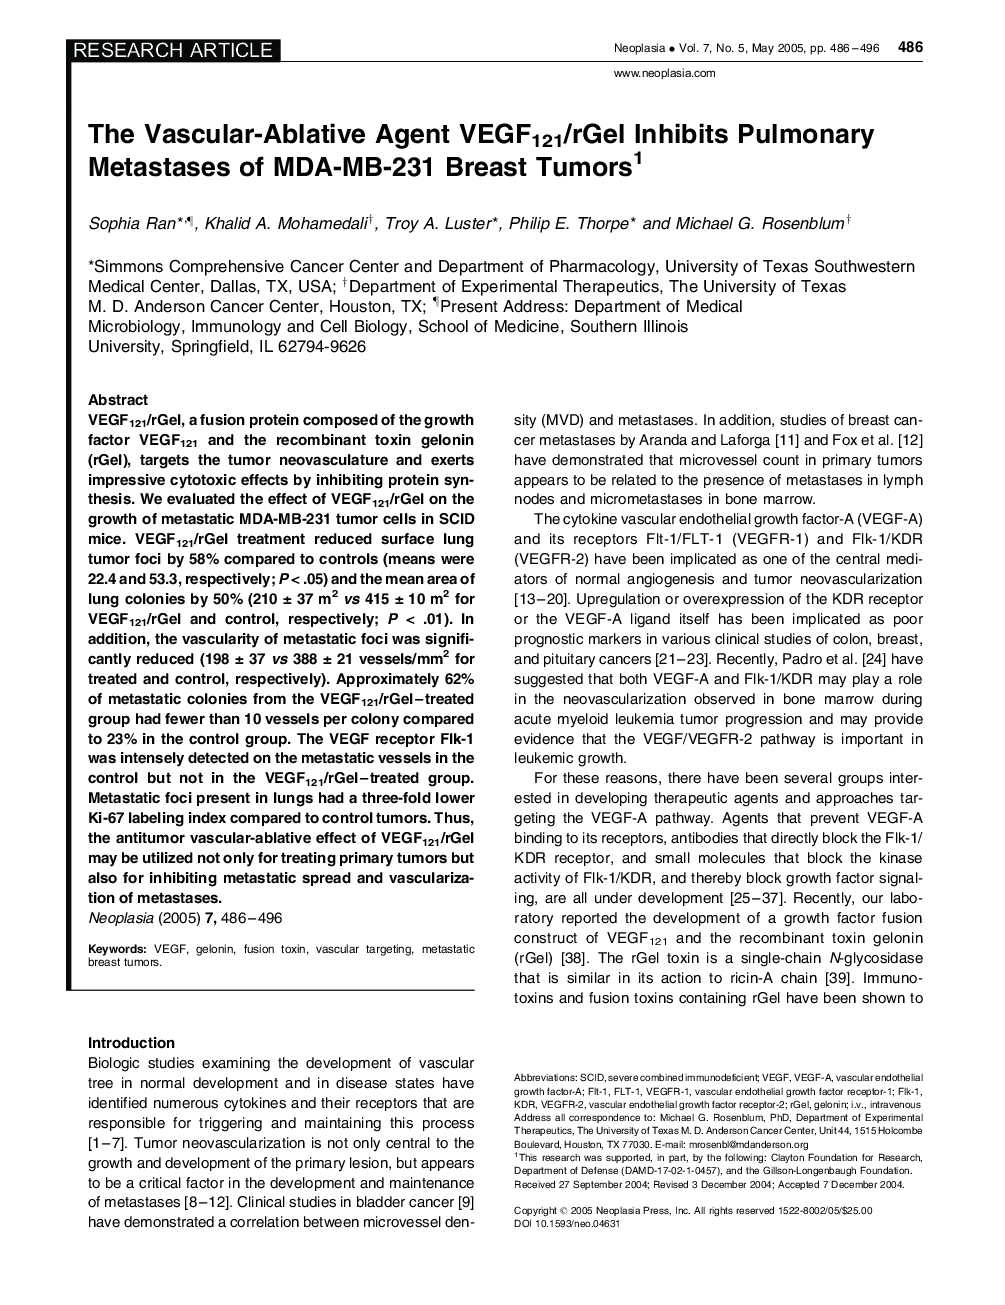 The Vascular-Ablative Agent VEGF121/rGel Inhibits Pulmonary Metastases of MDA-MB-231 Breast Tumors